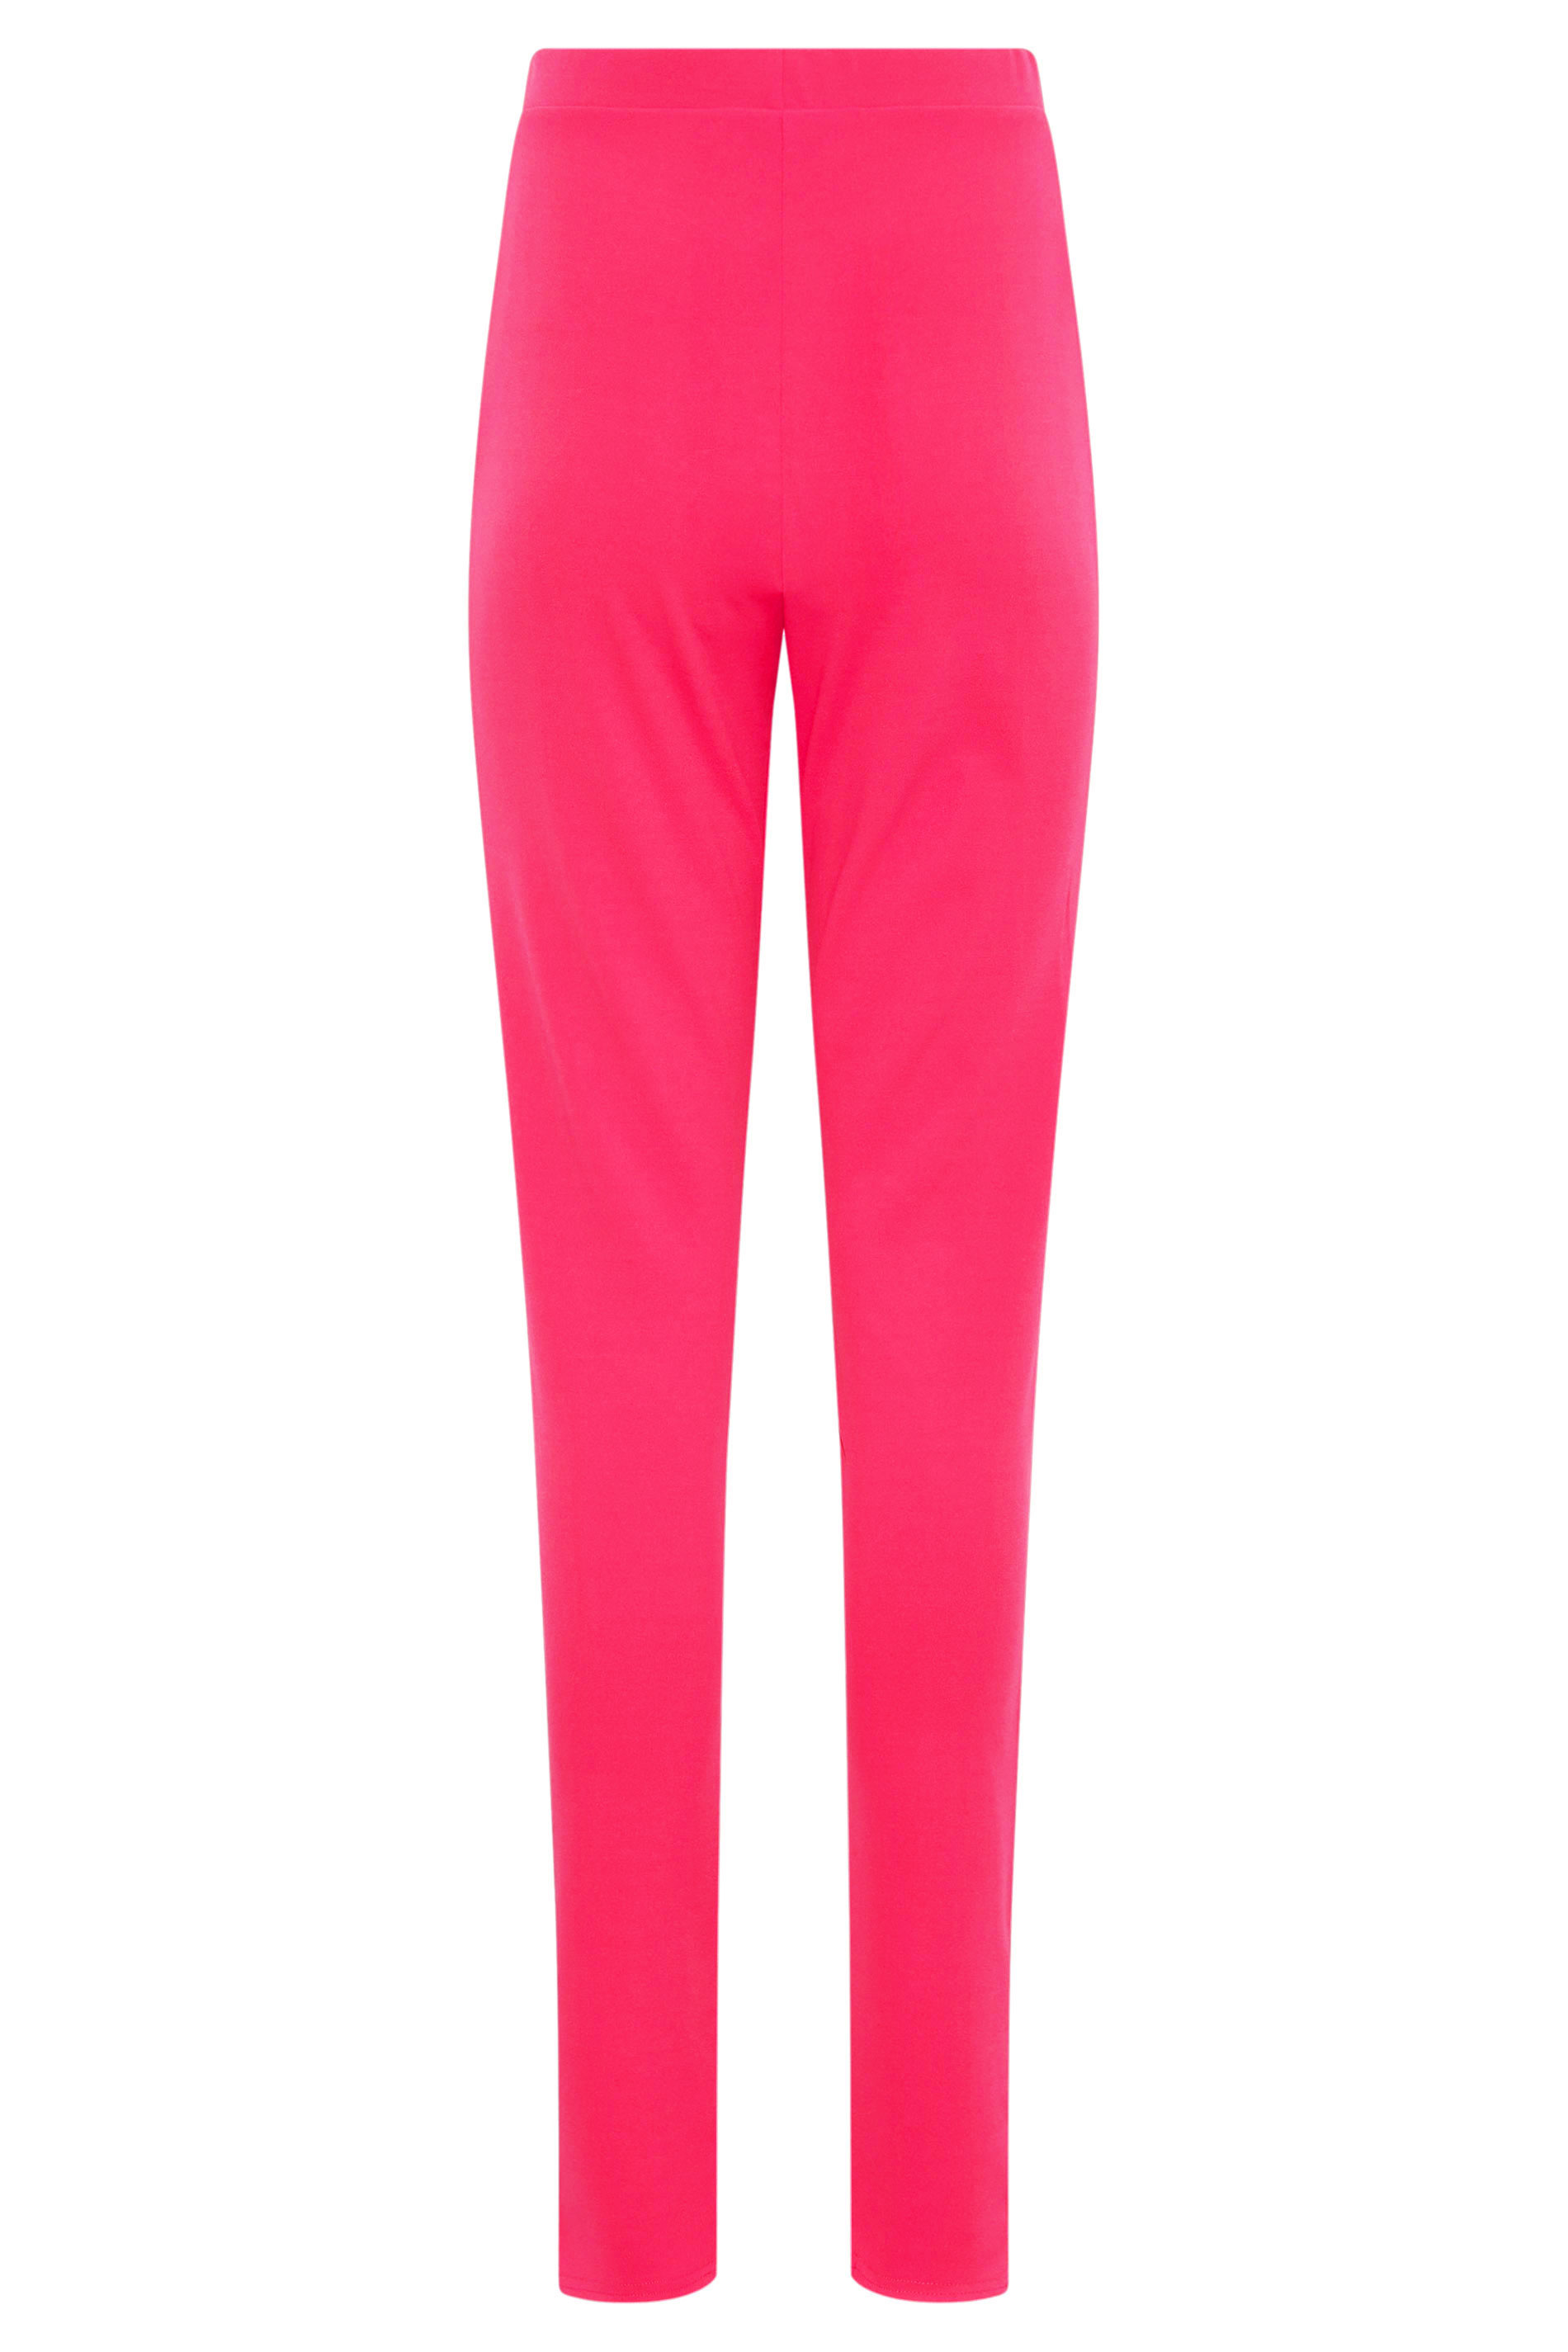 MARKS & SPENCER Regular Fit Women Pink Trousers - Buy MARKS & SPENCER  Regular Fit Women Pink Trousers Online at Best Prices in India |  Flipkart.com